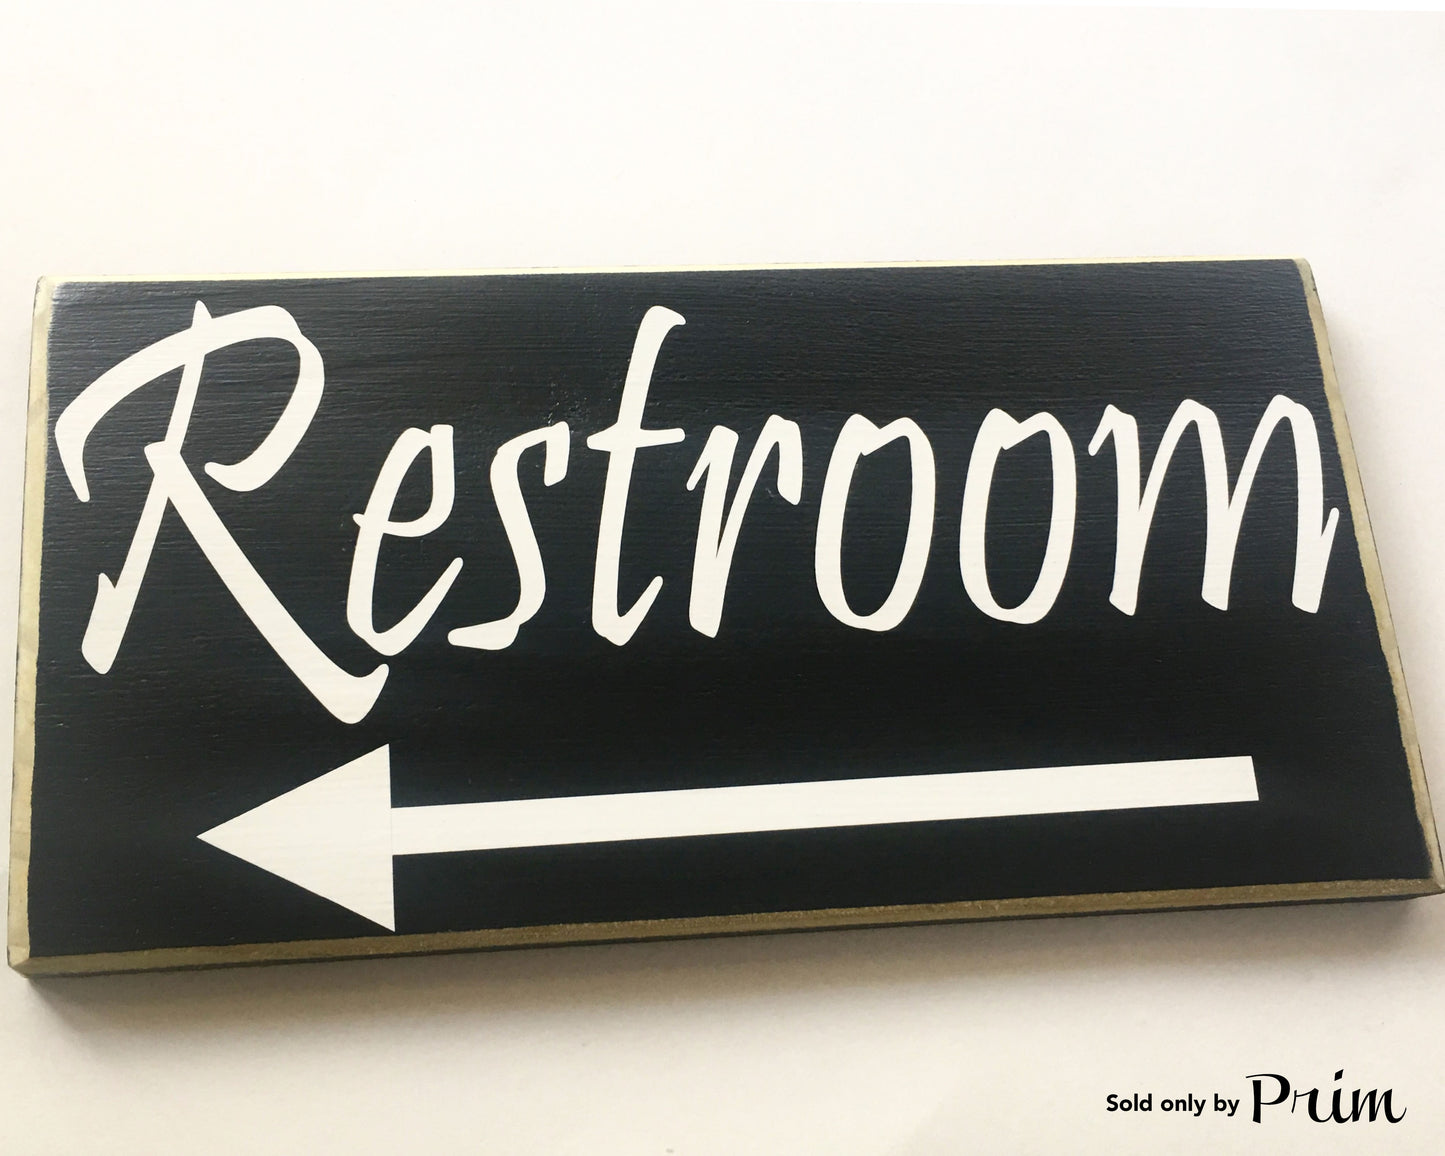 12x6 Restroom with Arrow Wood Bathroom Business Sign